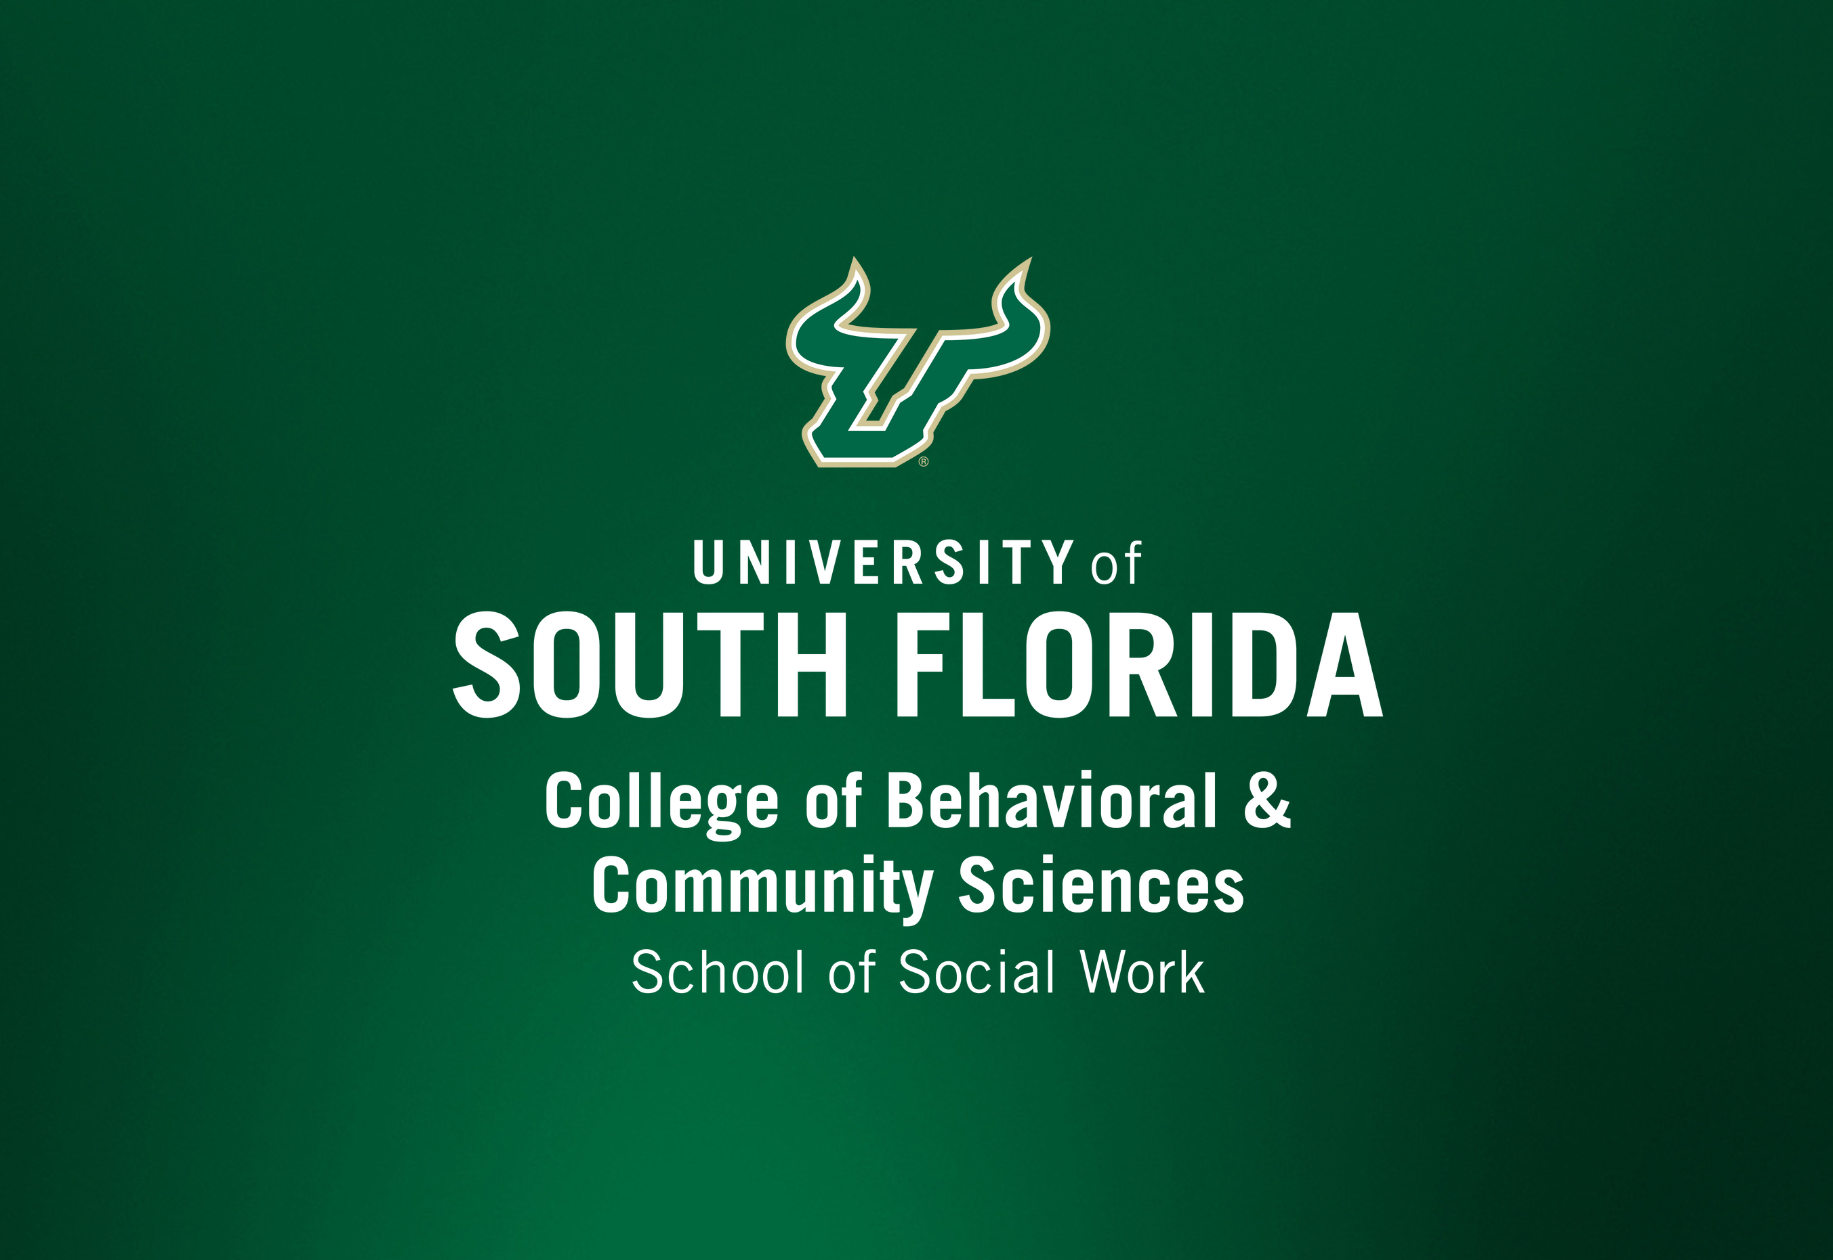 USF School of Social Work logo on green background